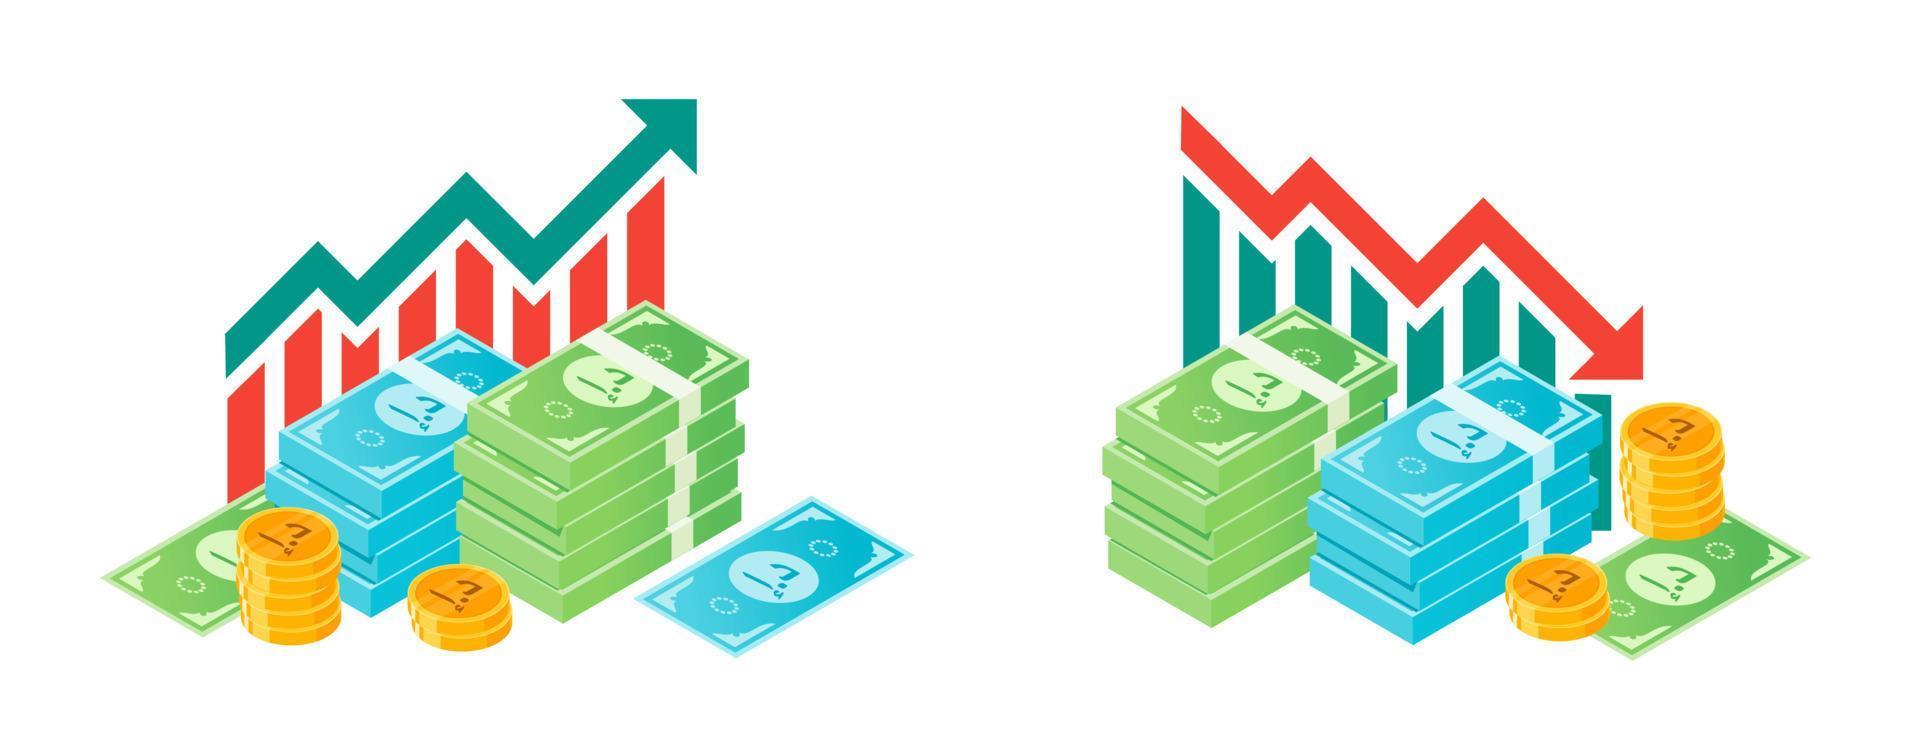 United Arab Emirates Dirham Fluctuation with Money Bundle Illustrations vector